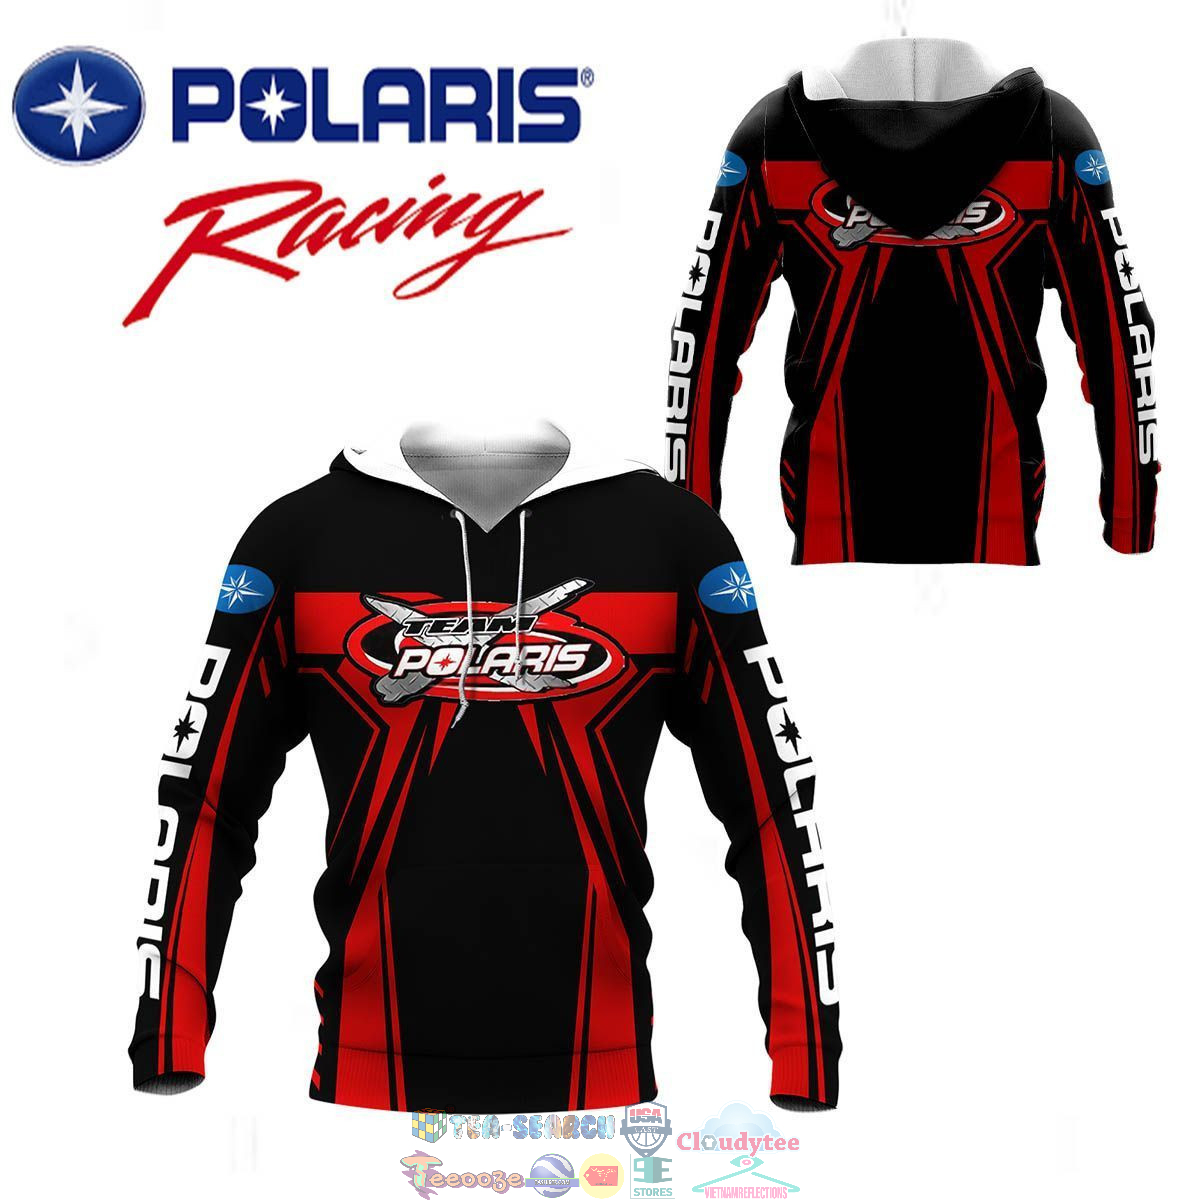 KXZ7Qw6o-TH160822-43xxxPolaris-Racing-Team-ver-4-3D-hoodie-and-t-shirt3.jpg